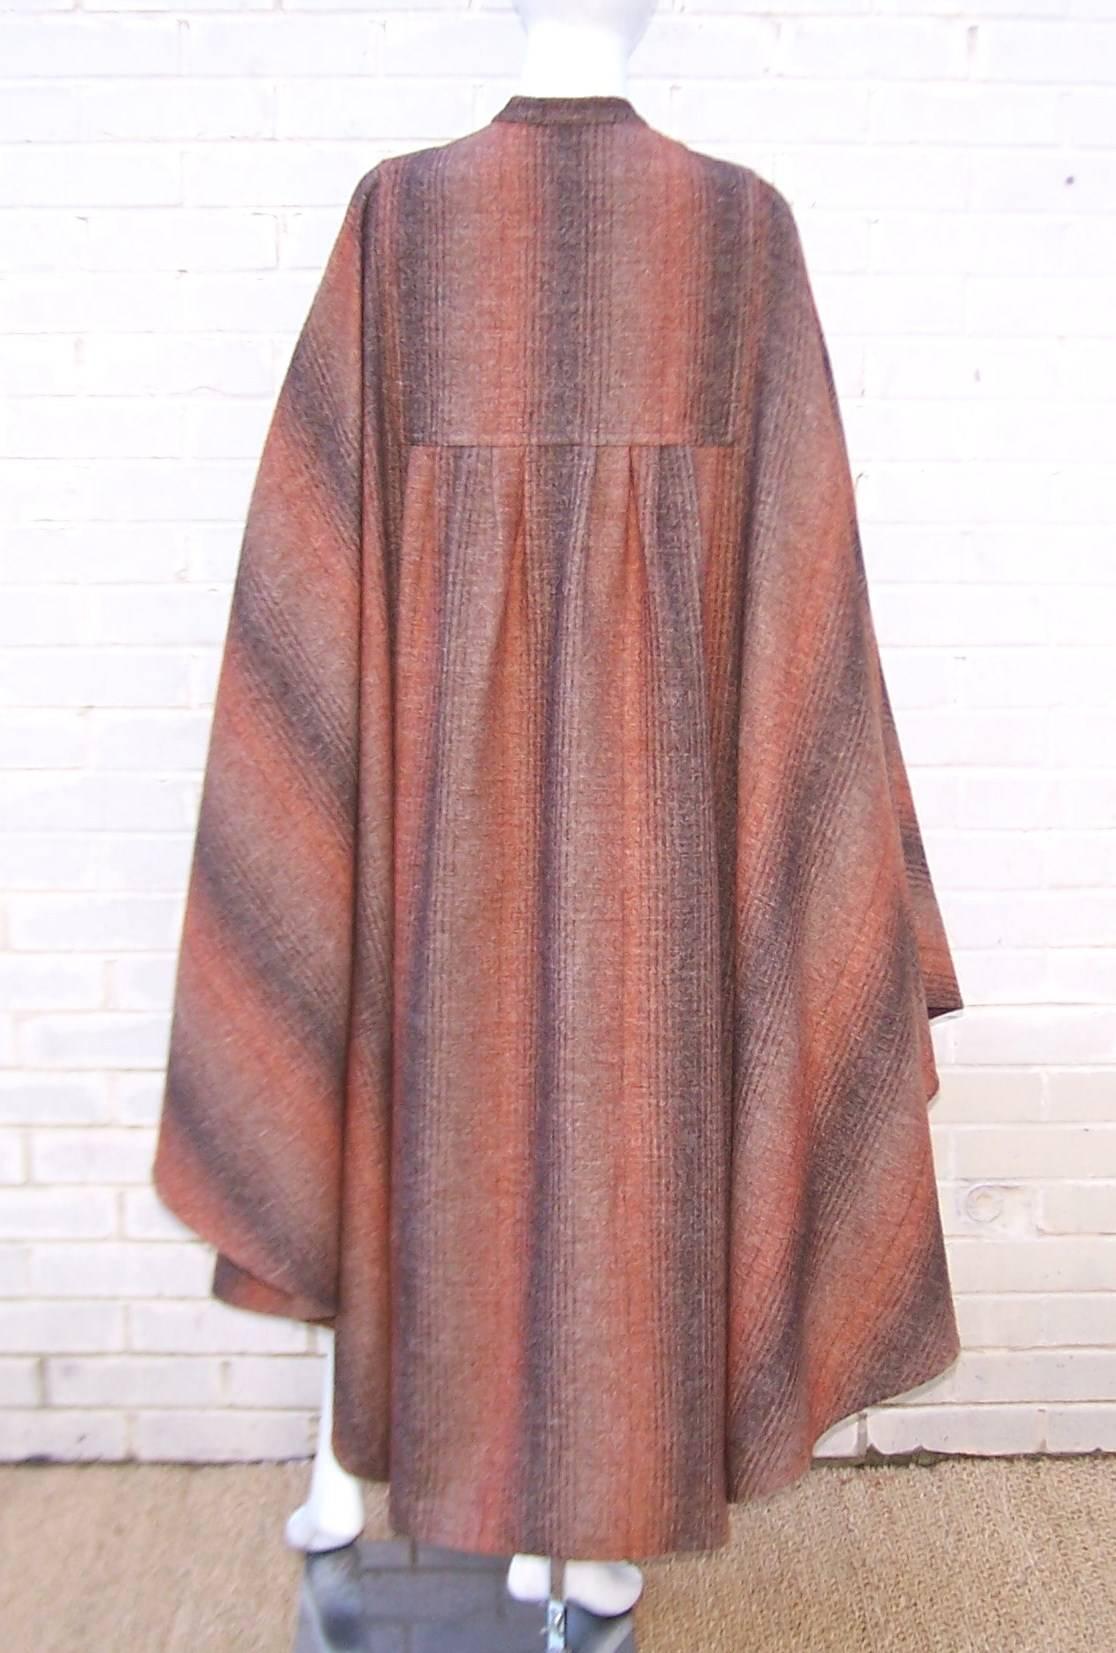 Women's 1970's Lanvin Haute Couture Autumnal Wool Tweed Cape